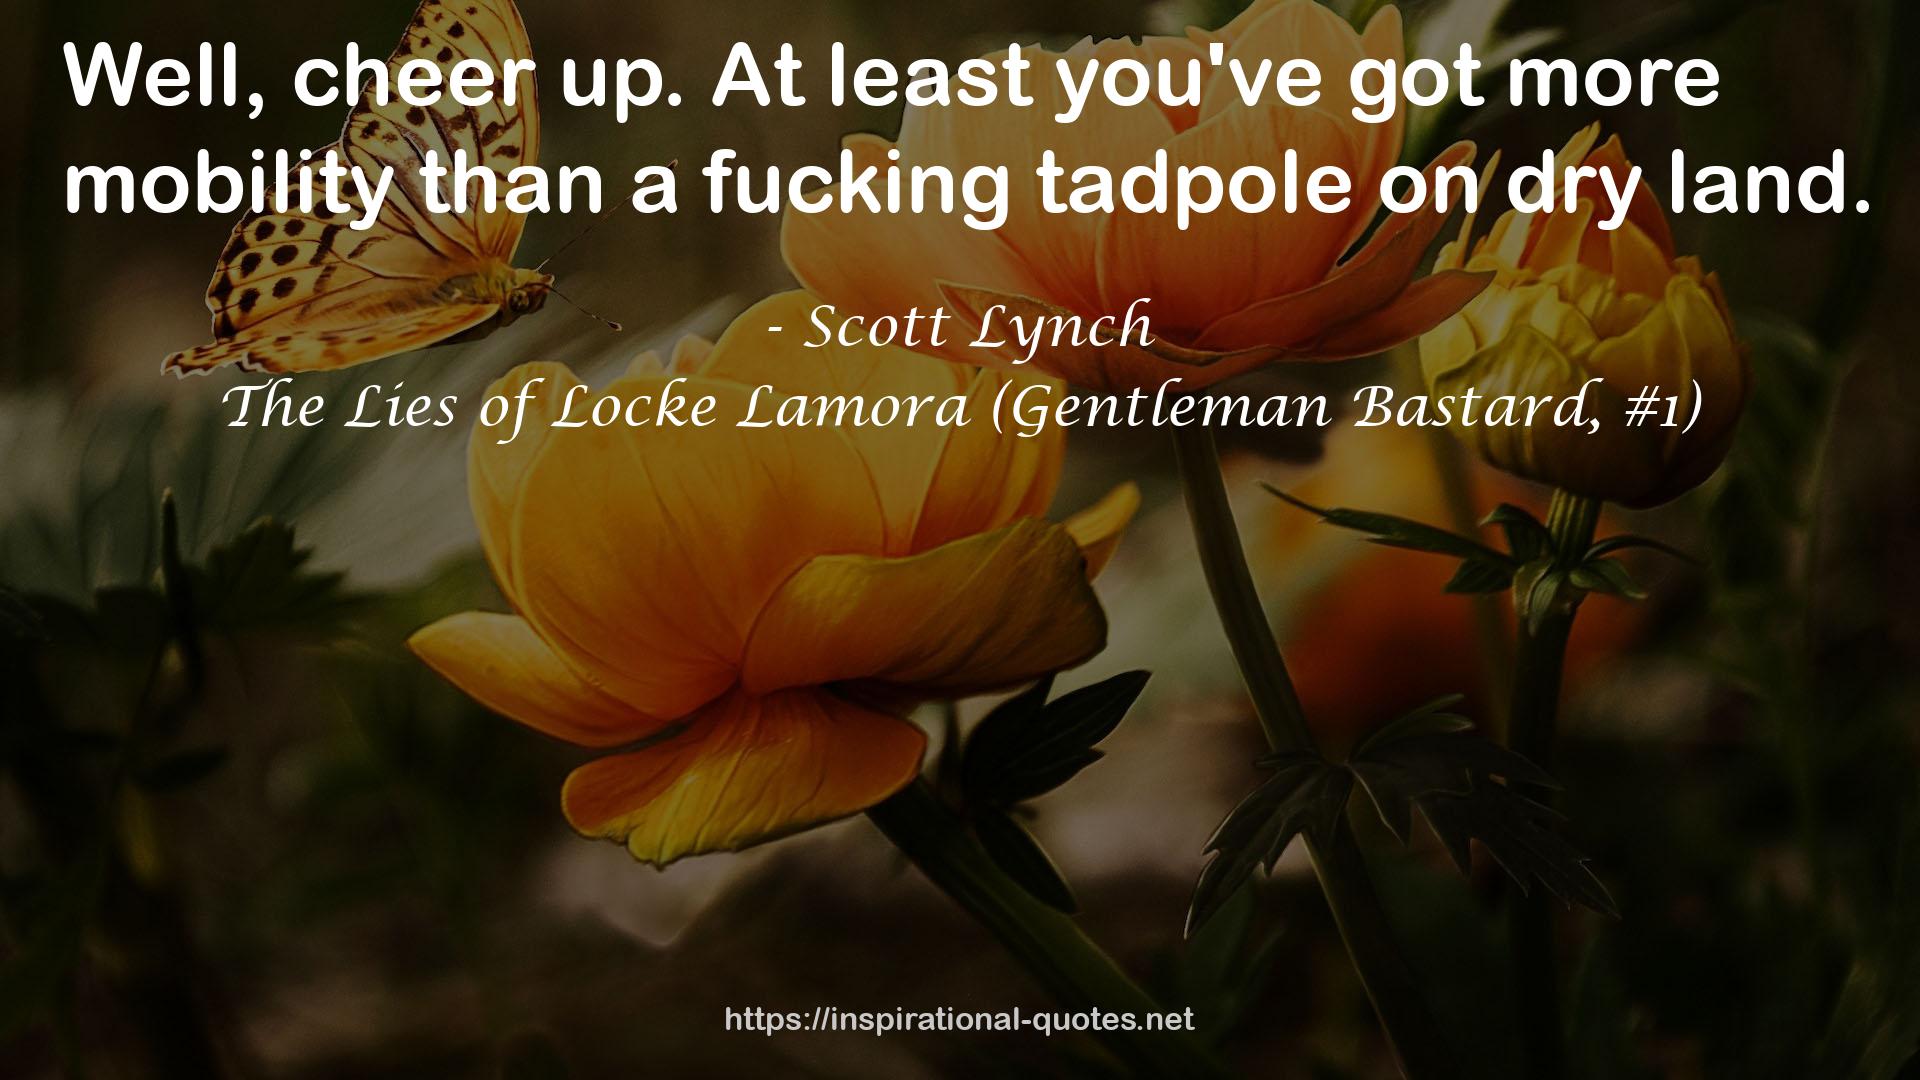 The Lies of Locke Lamora (Gentleman Bastard, #1) QUOTES